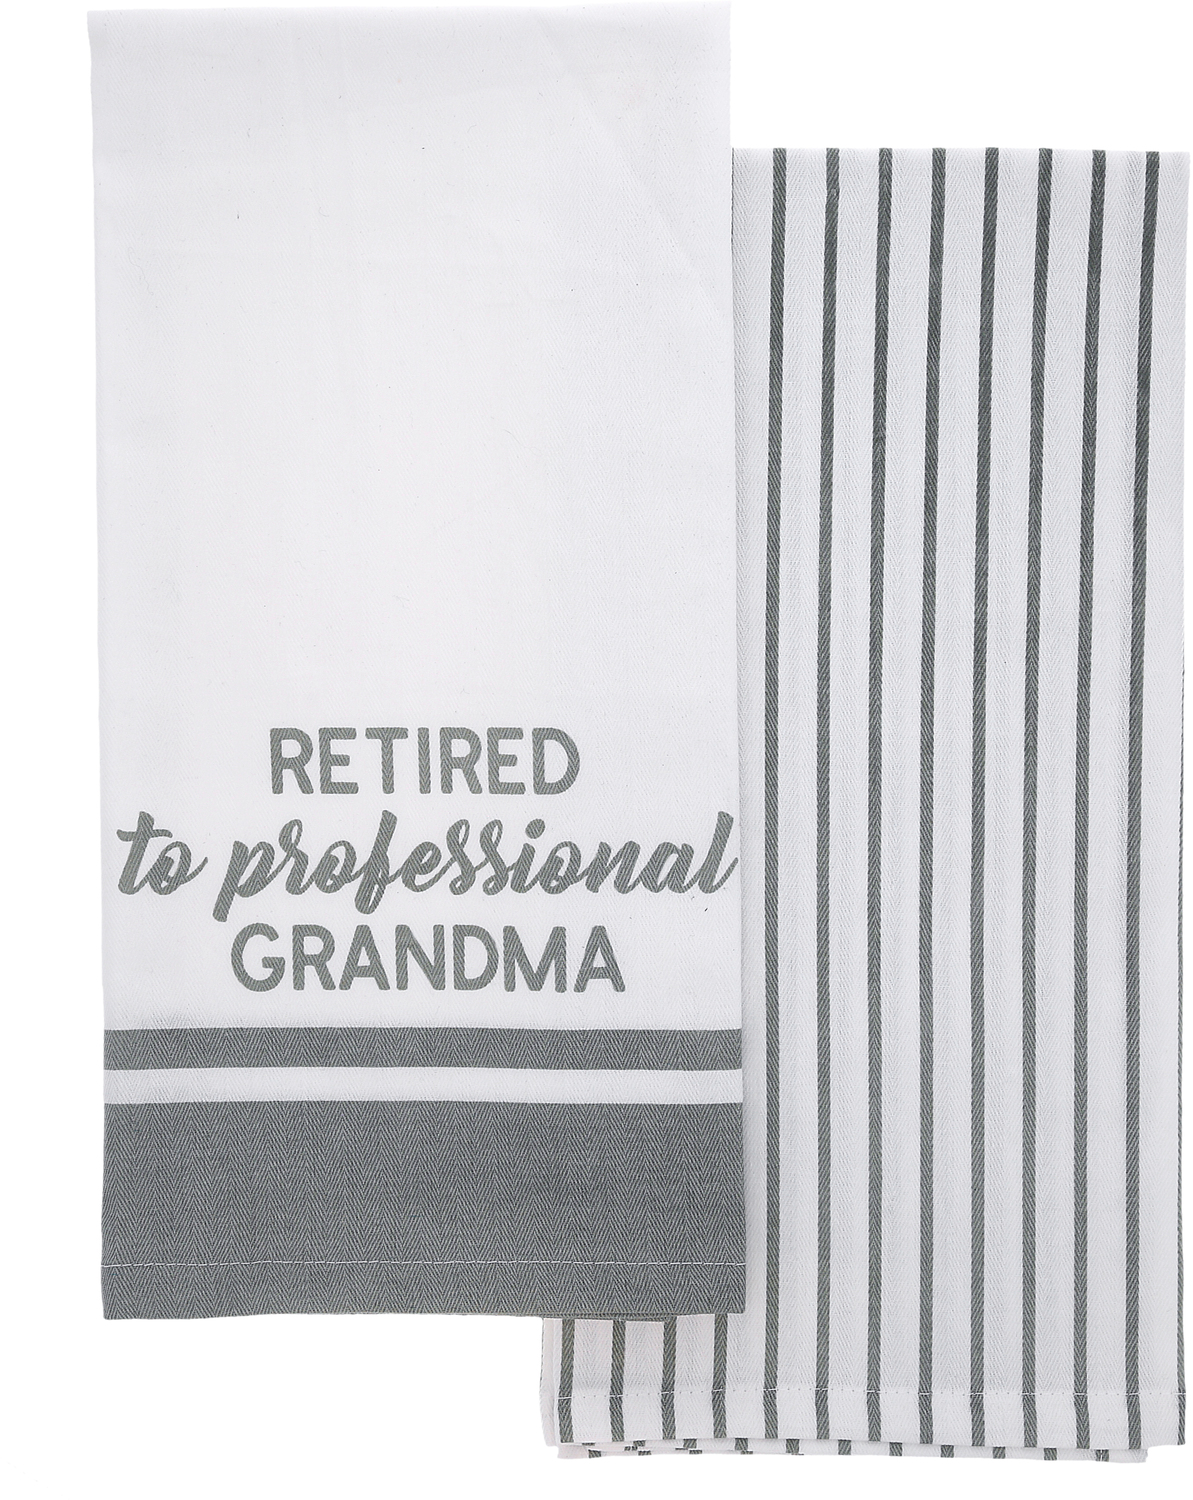 Professional Grandma by Retired Life - Professional Grandma - Tea Towel Gift Set (2 - 20" x 28")